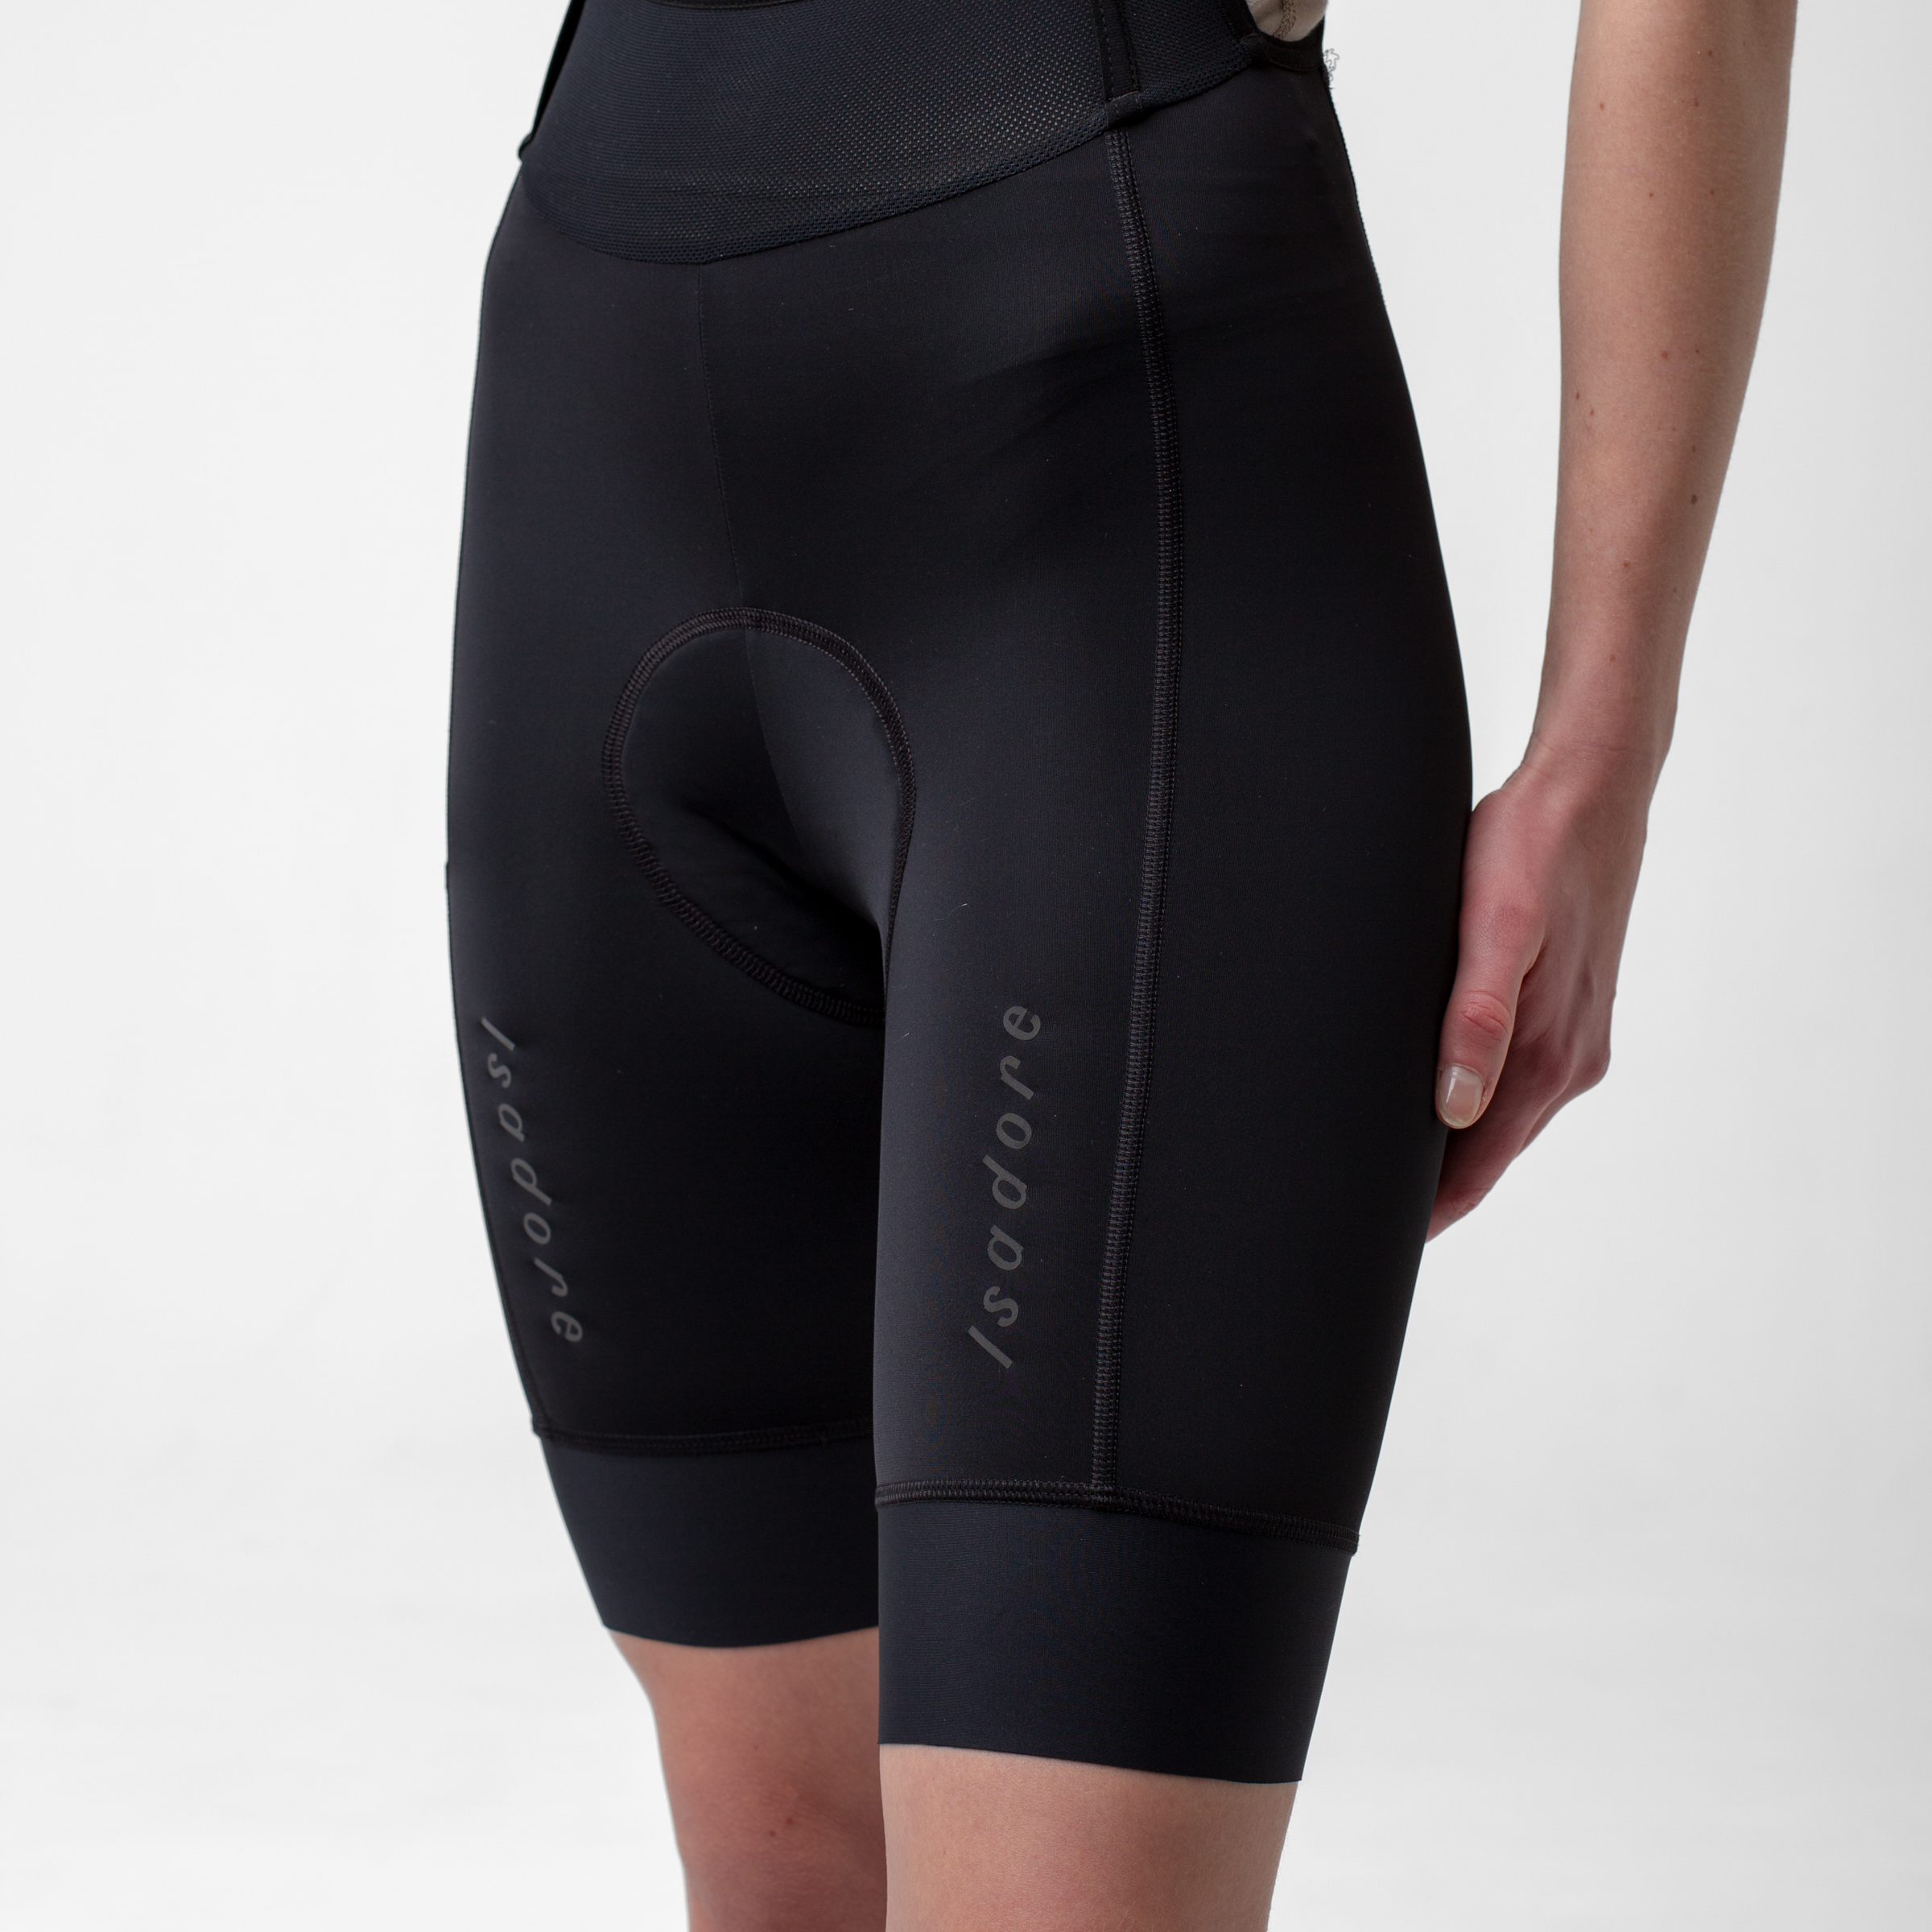 Cut tights into shorts - DIY bike short - Make leggings into short shorts